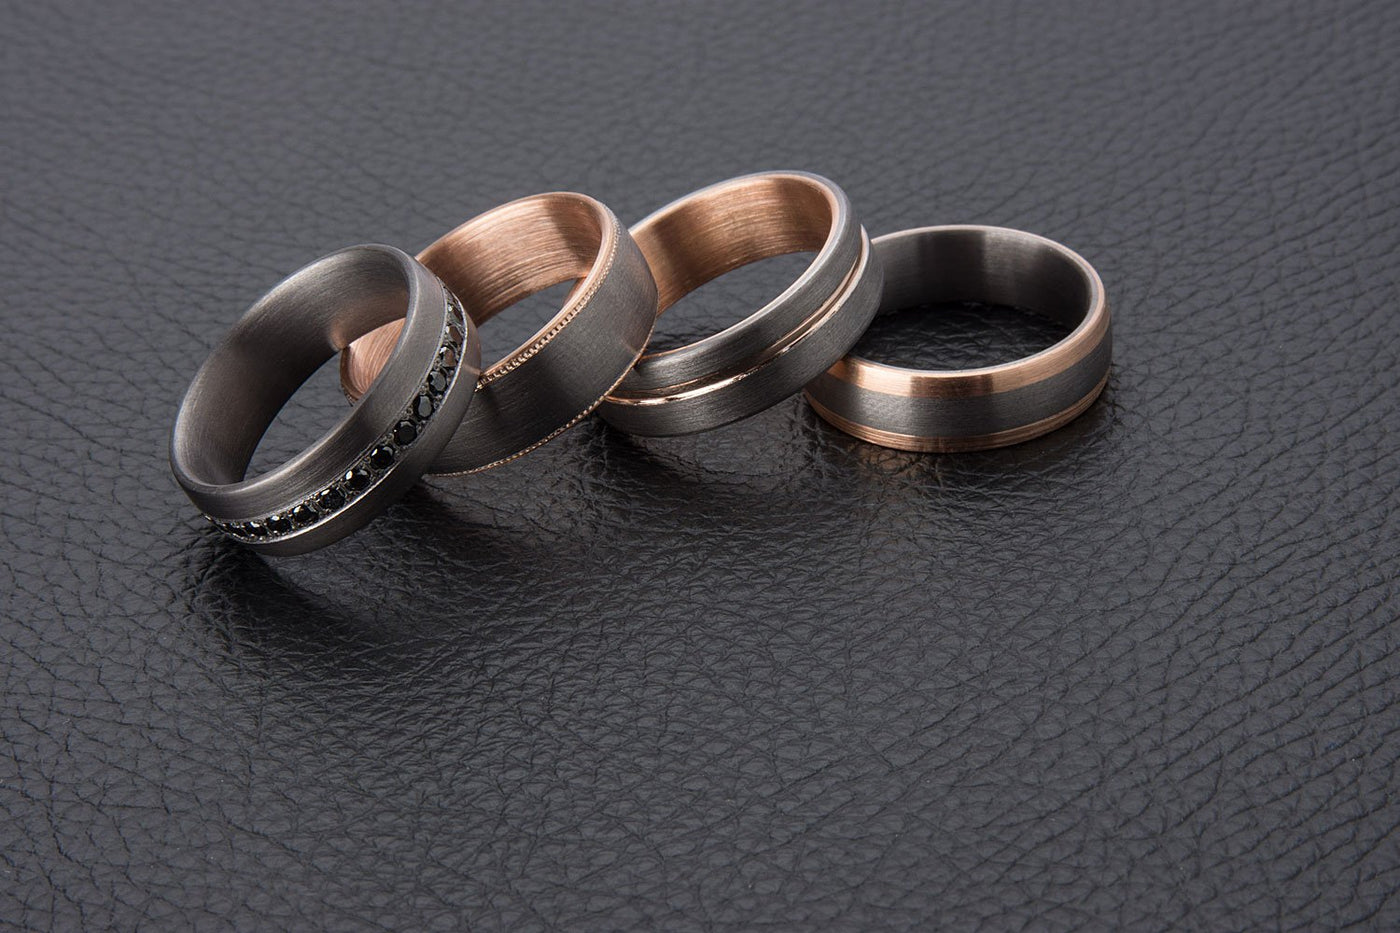 Tantalum and Black Diamond Wedding Ring